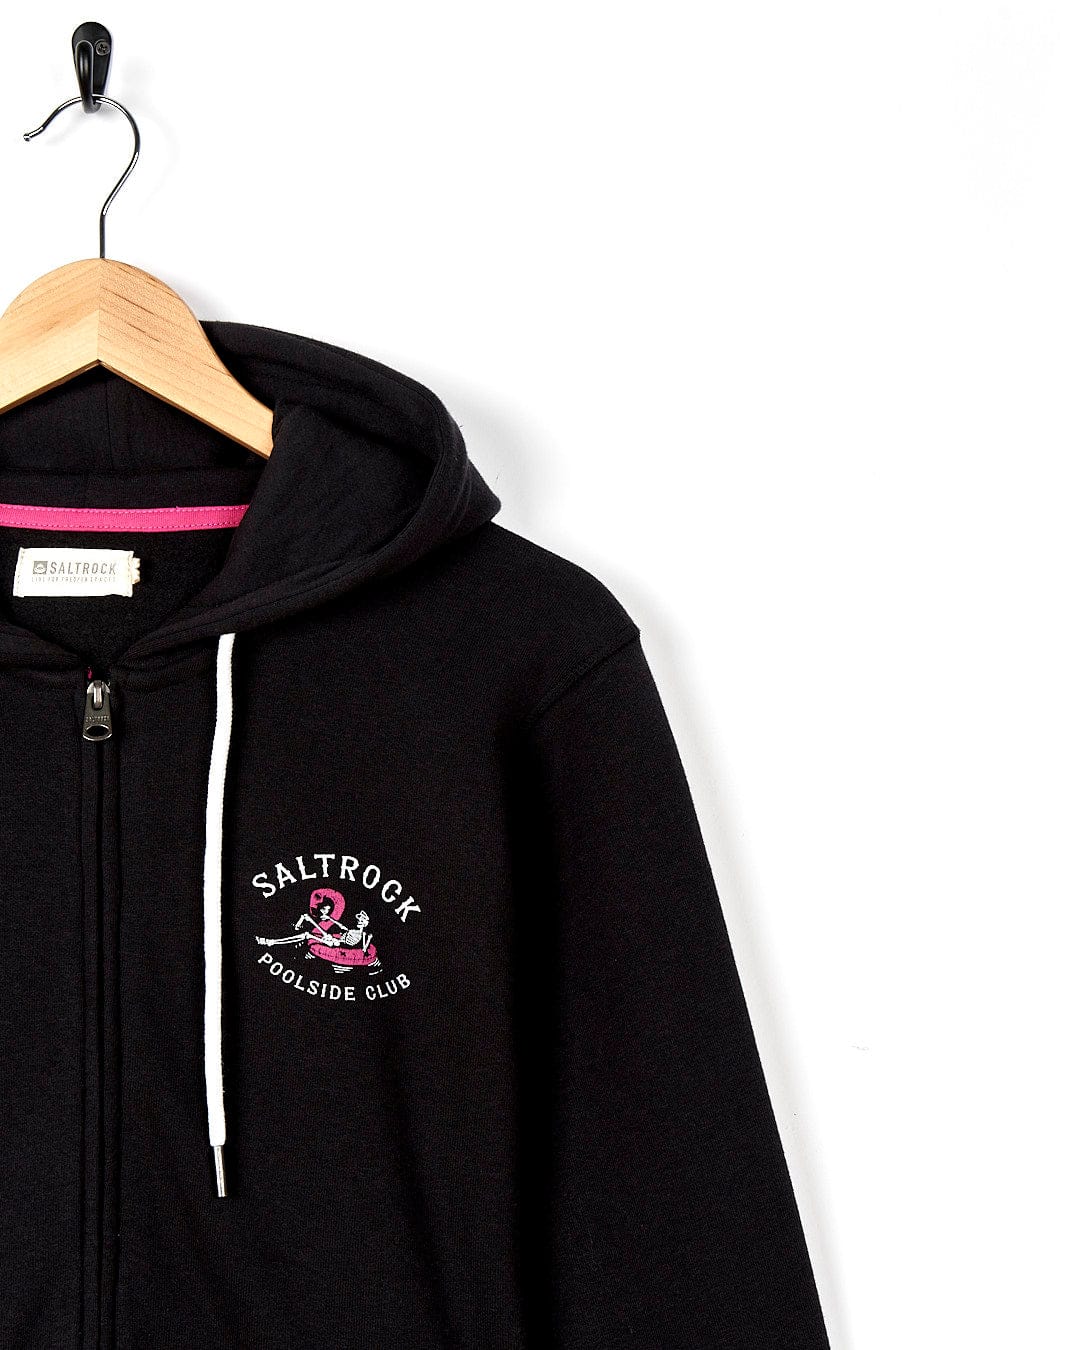 A Lee-Ann - Womens Zip Hoodie - Black with a pink logo on it. Brand Name: Saltrock.